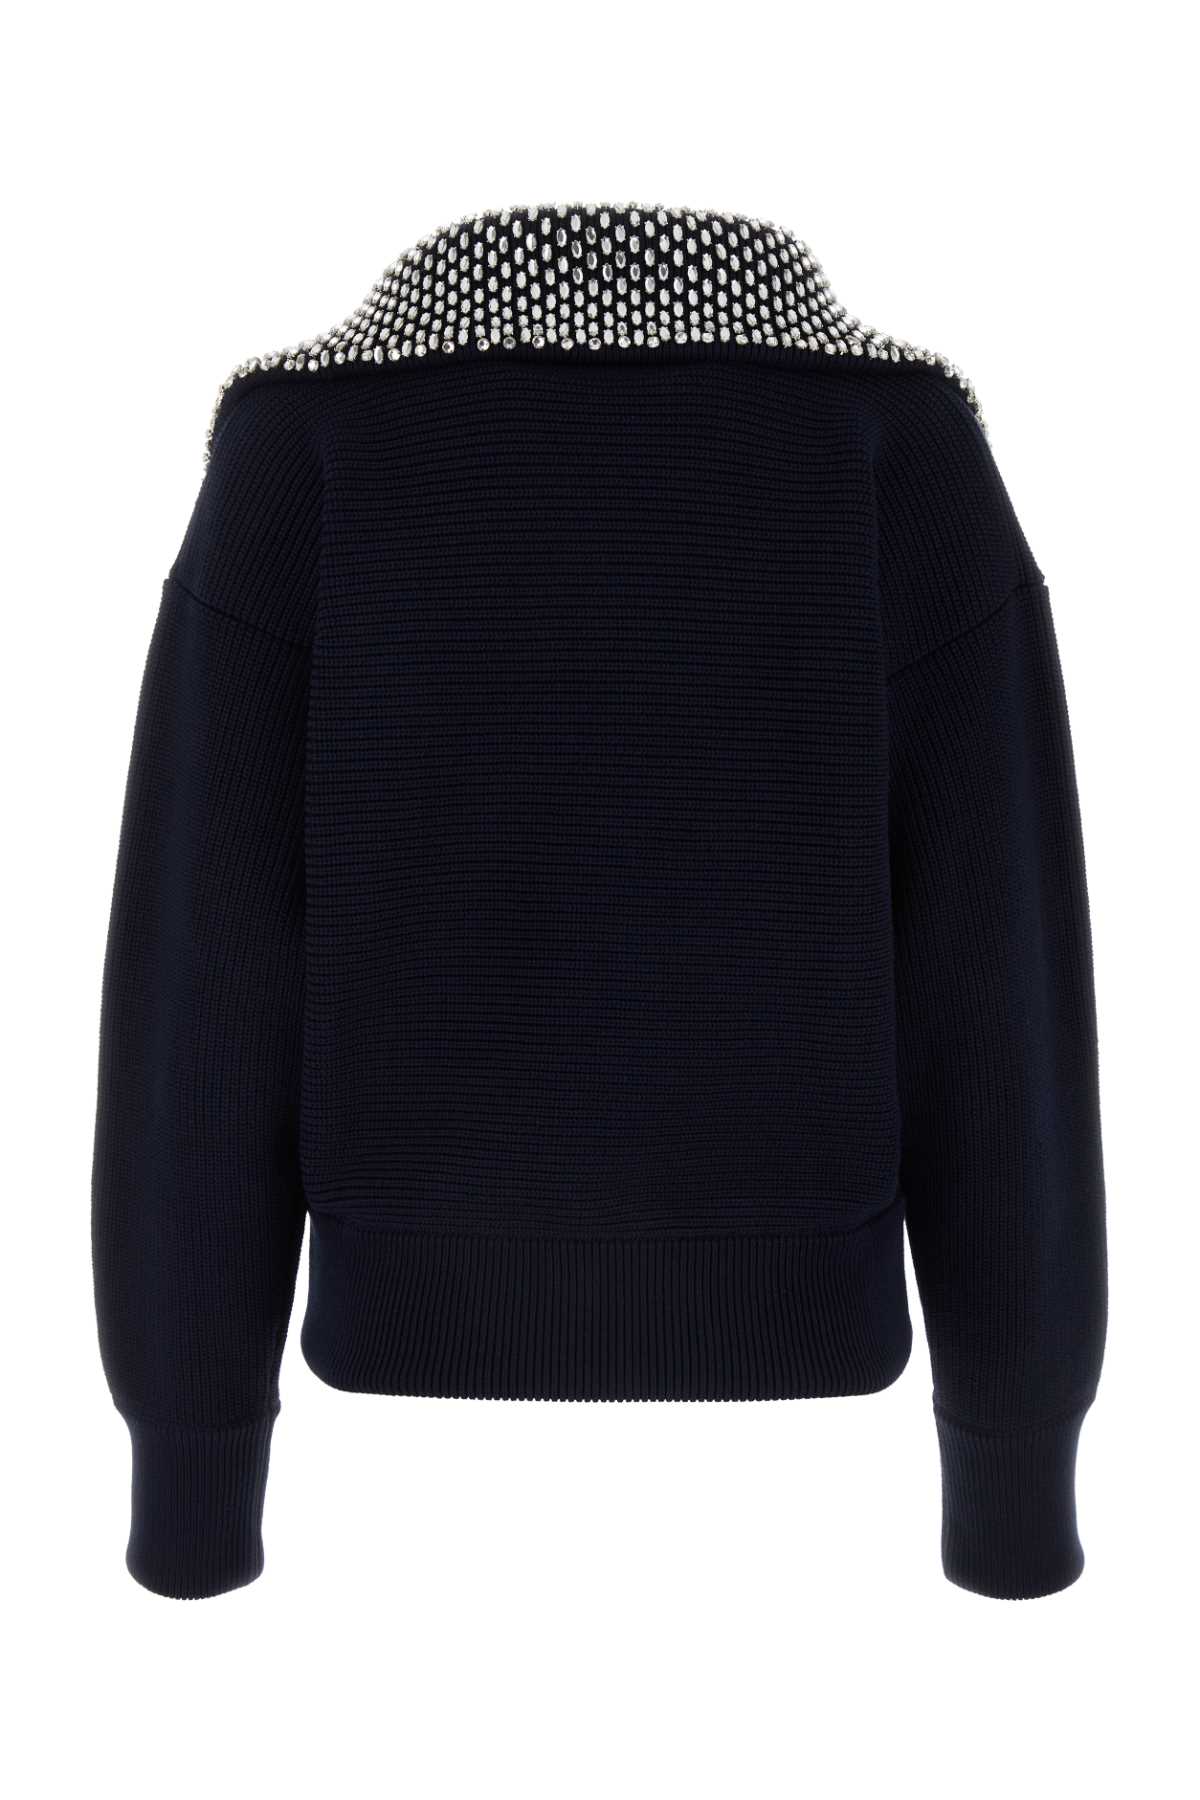 Shop Gucci Navy Blue Cotton Blend Sweater In Navymix